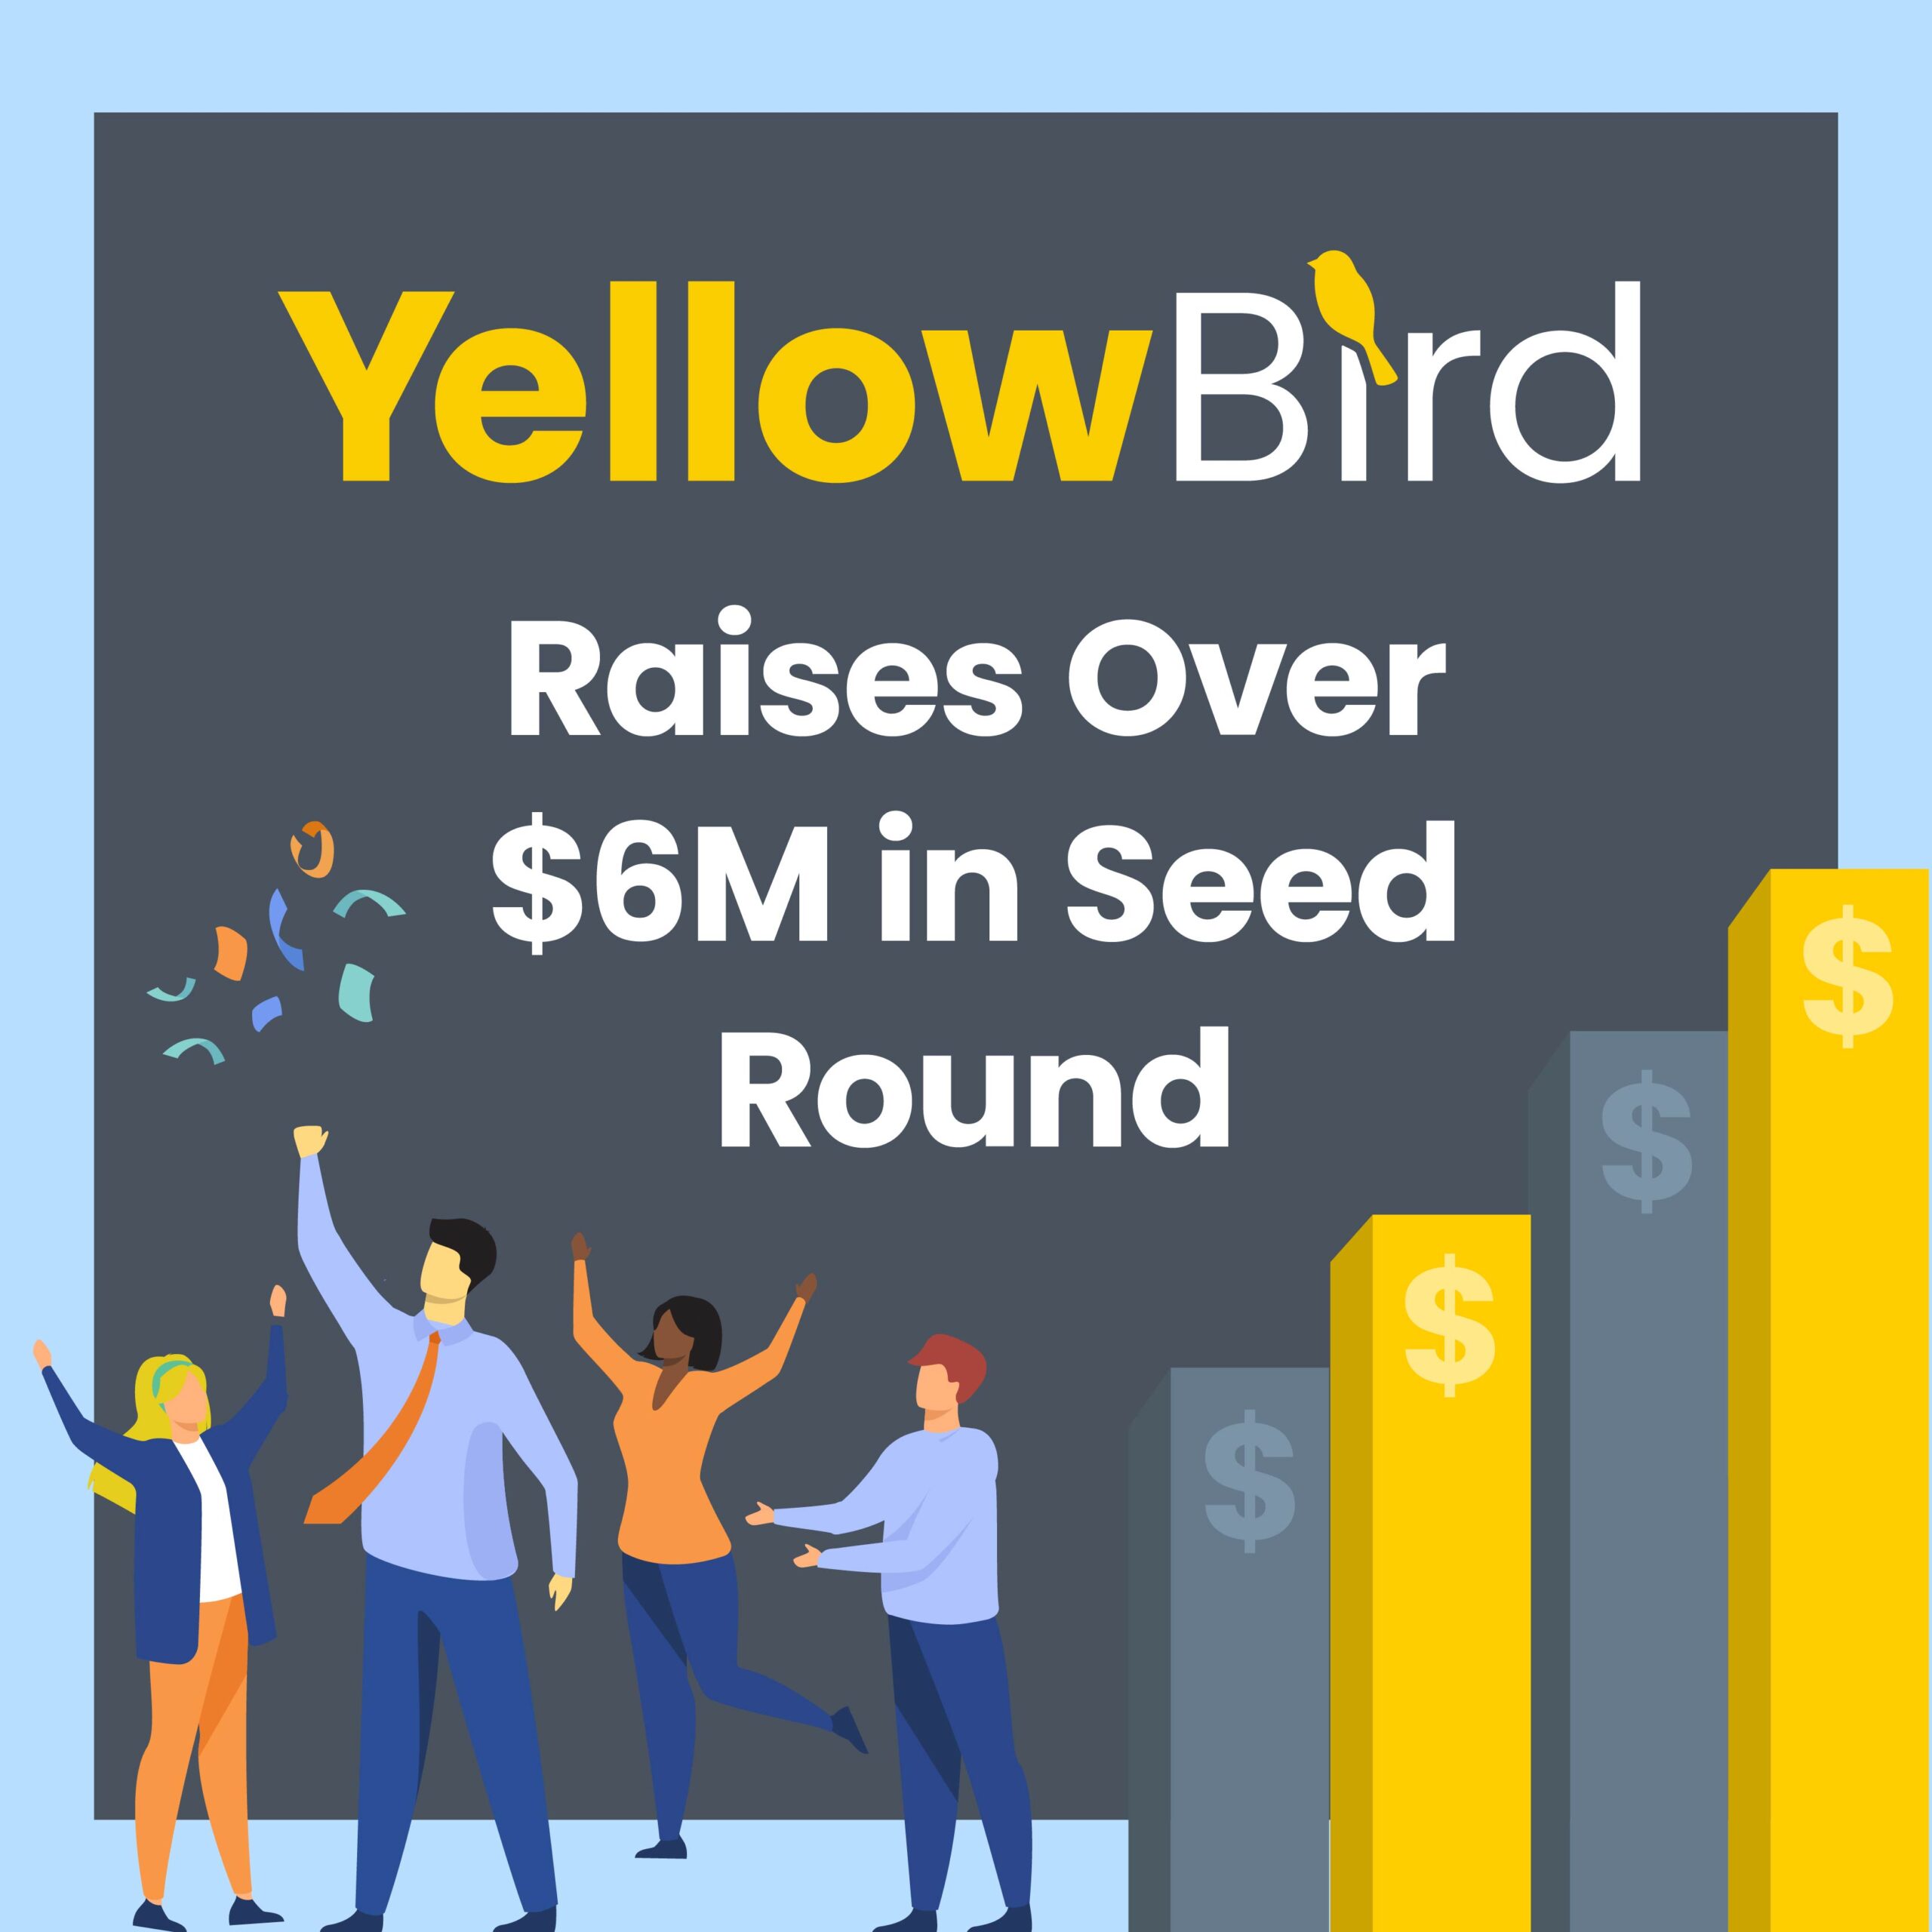 YellowBird Raises over $6M in Seed Round